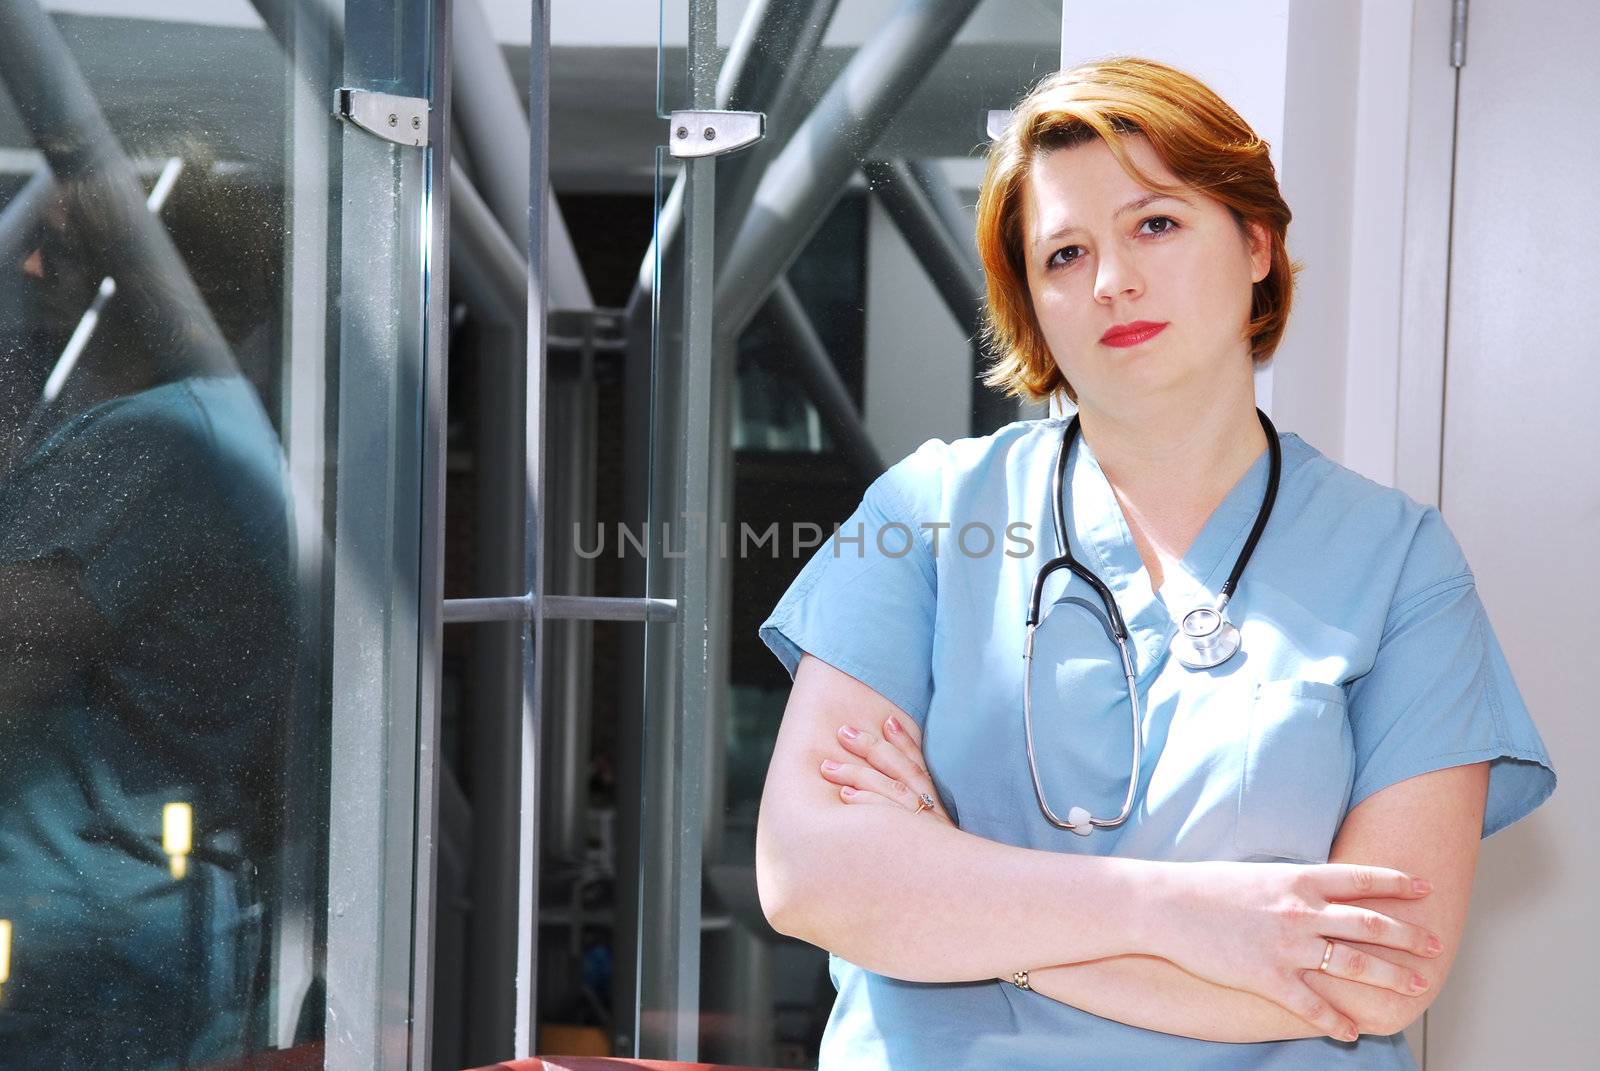 Nurse in a hospital by elenathewise